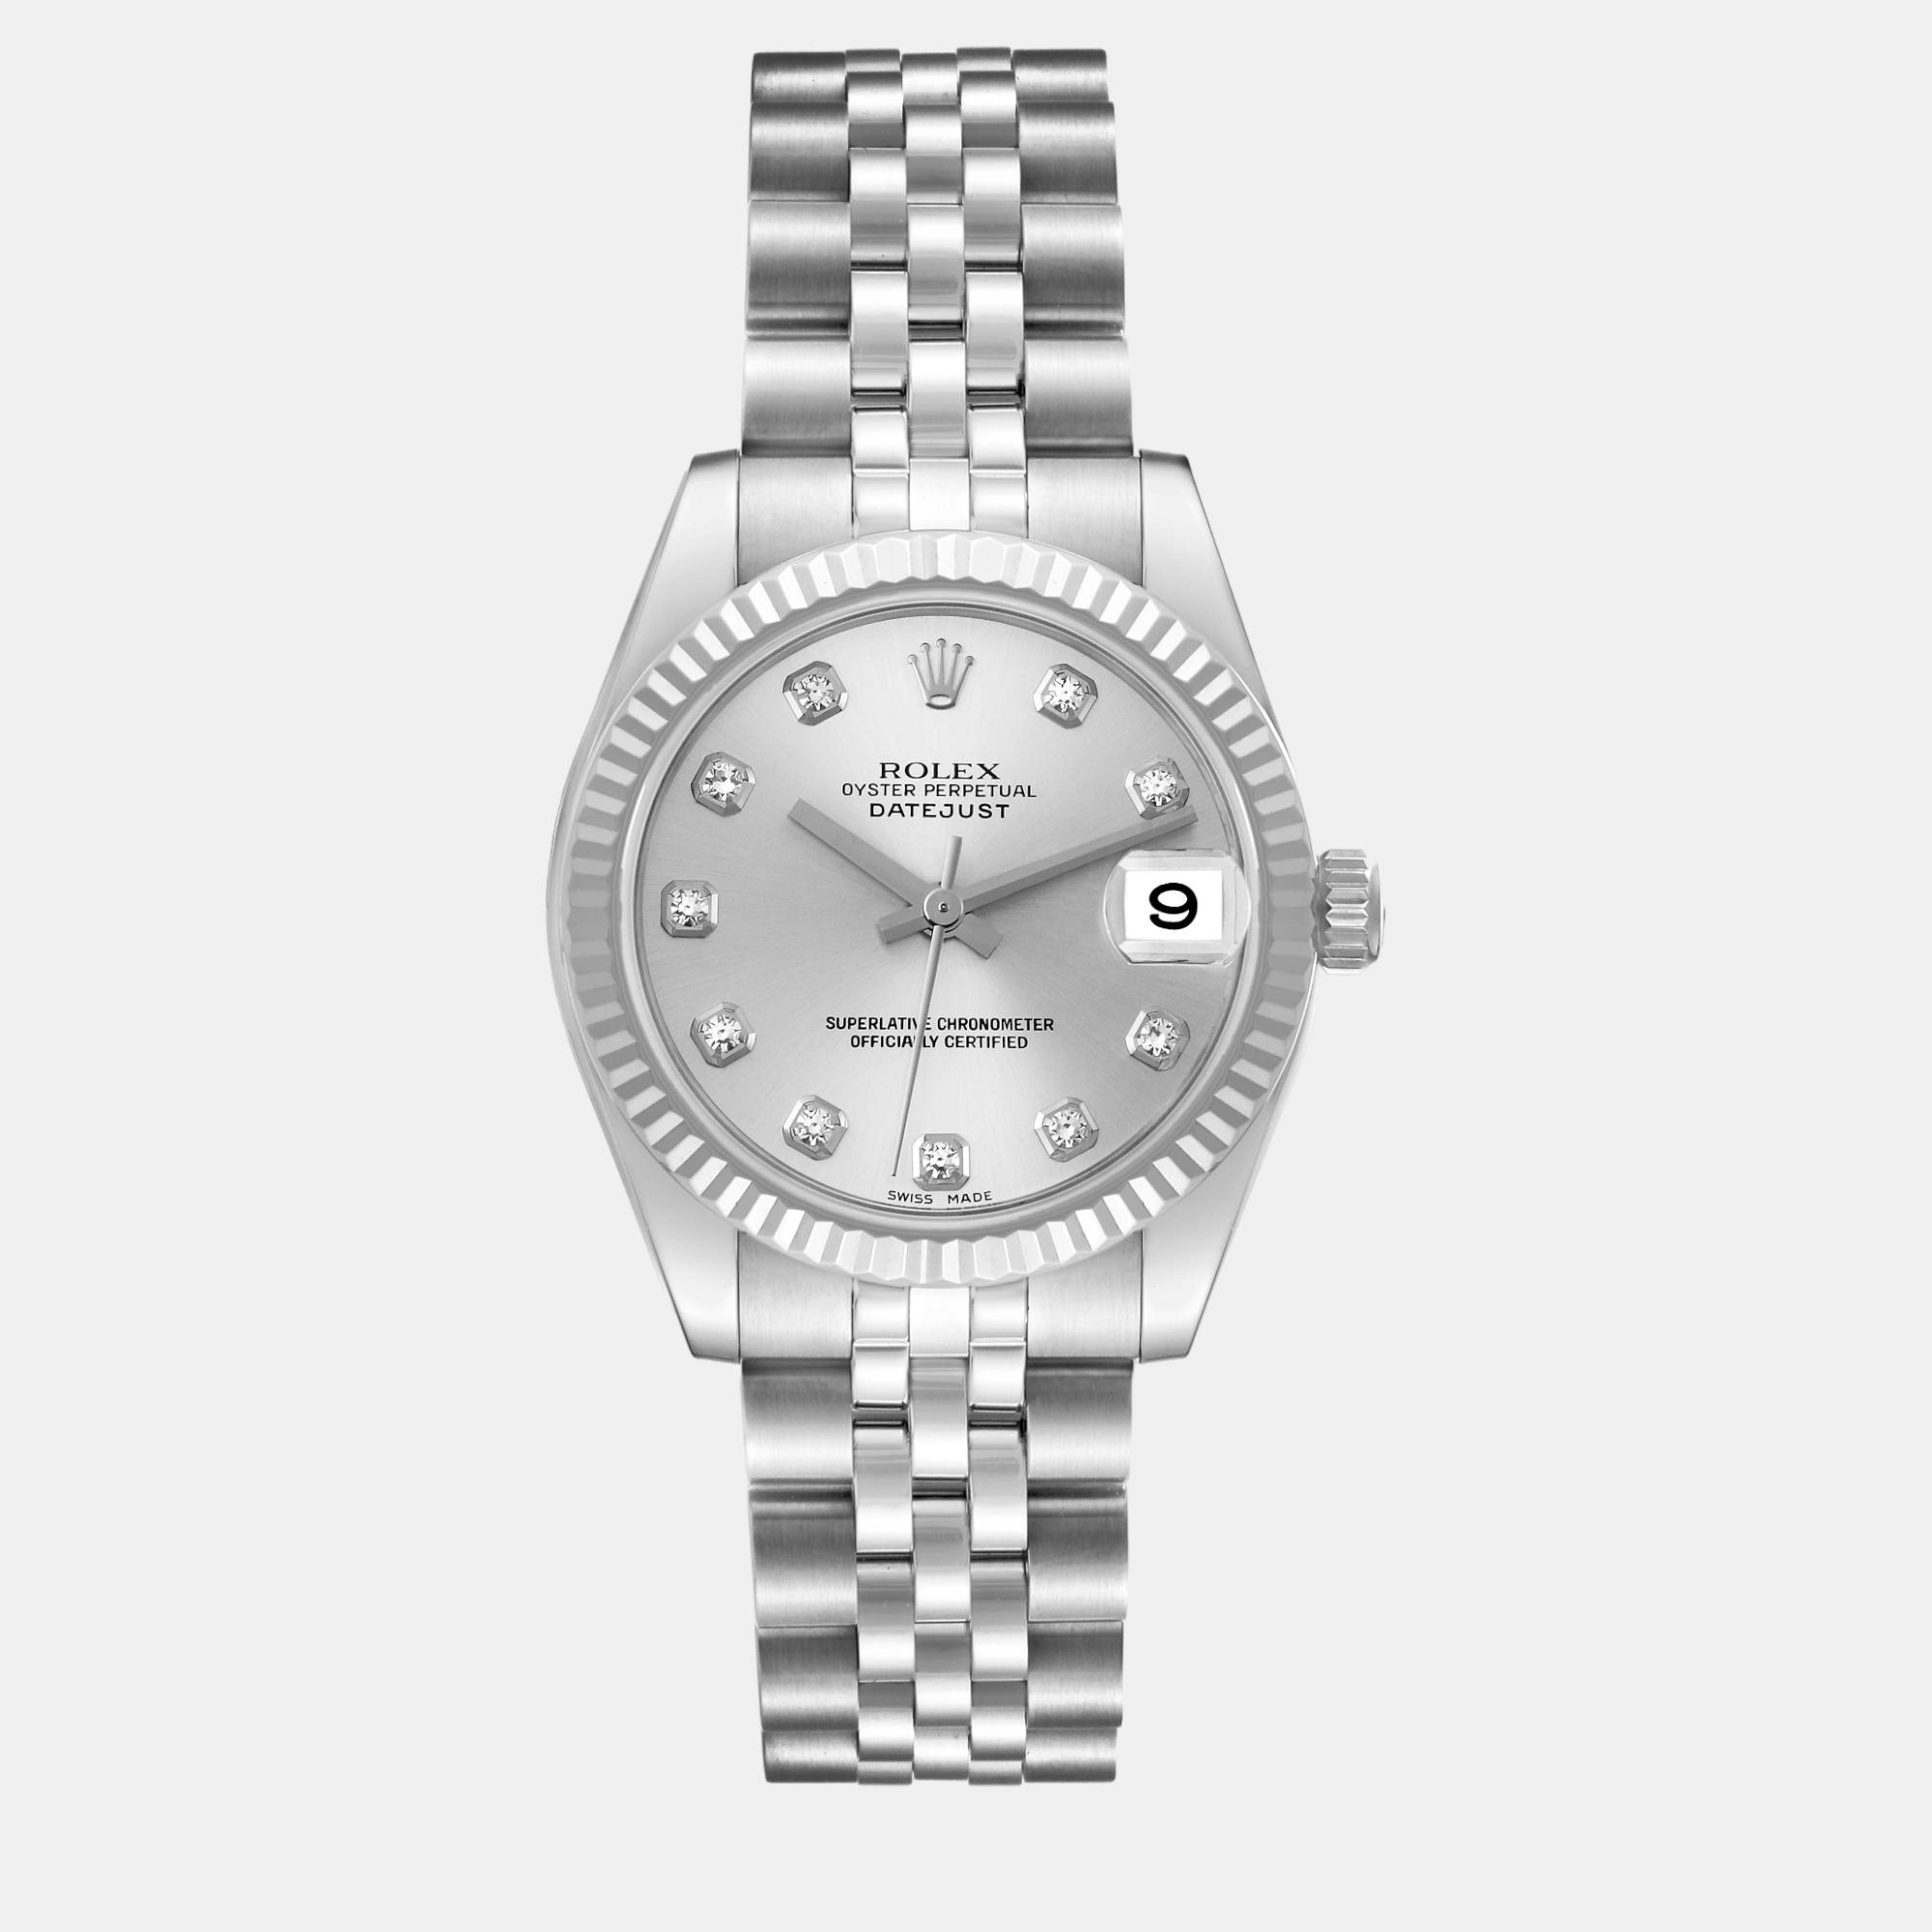 Rolex datejust midsize steel white gold diamond dial watch 178274 31 mm